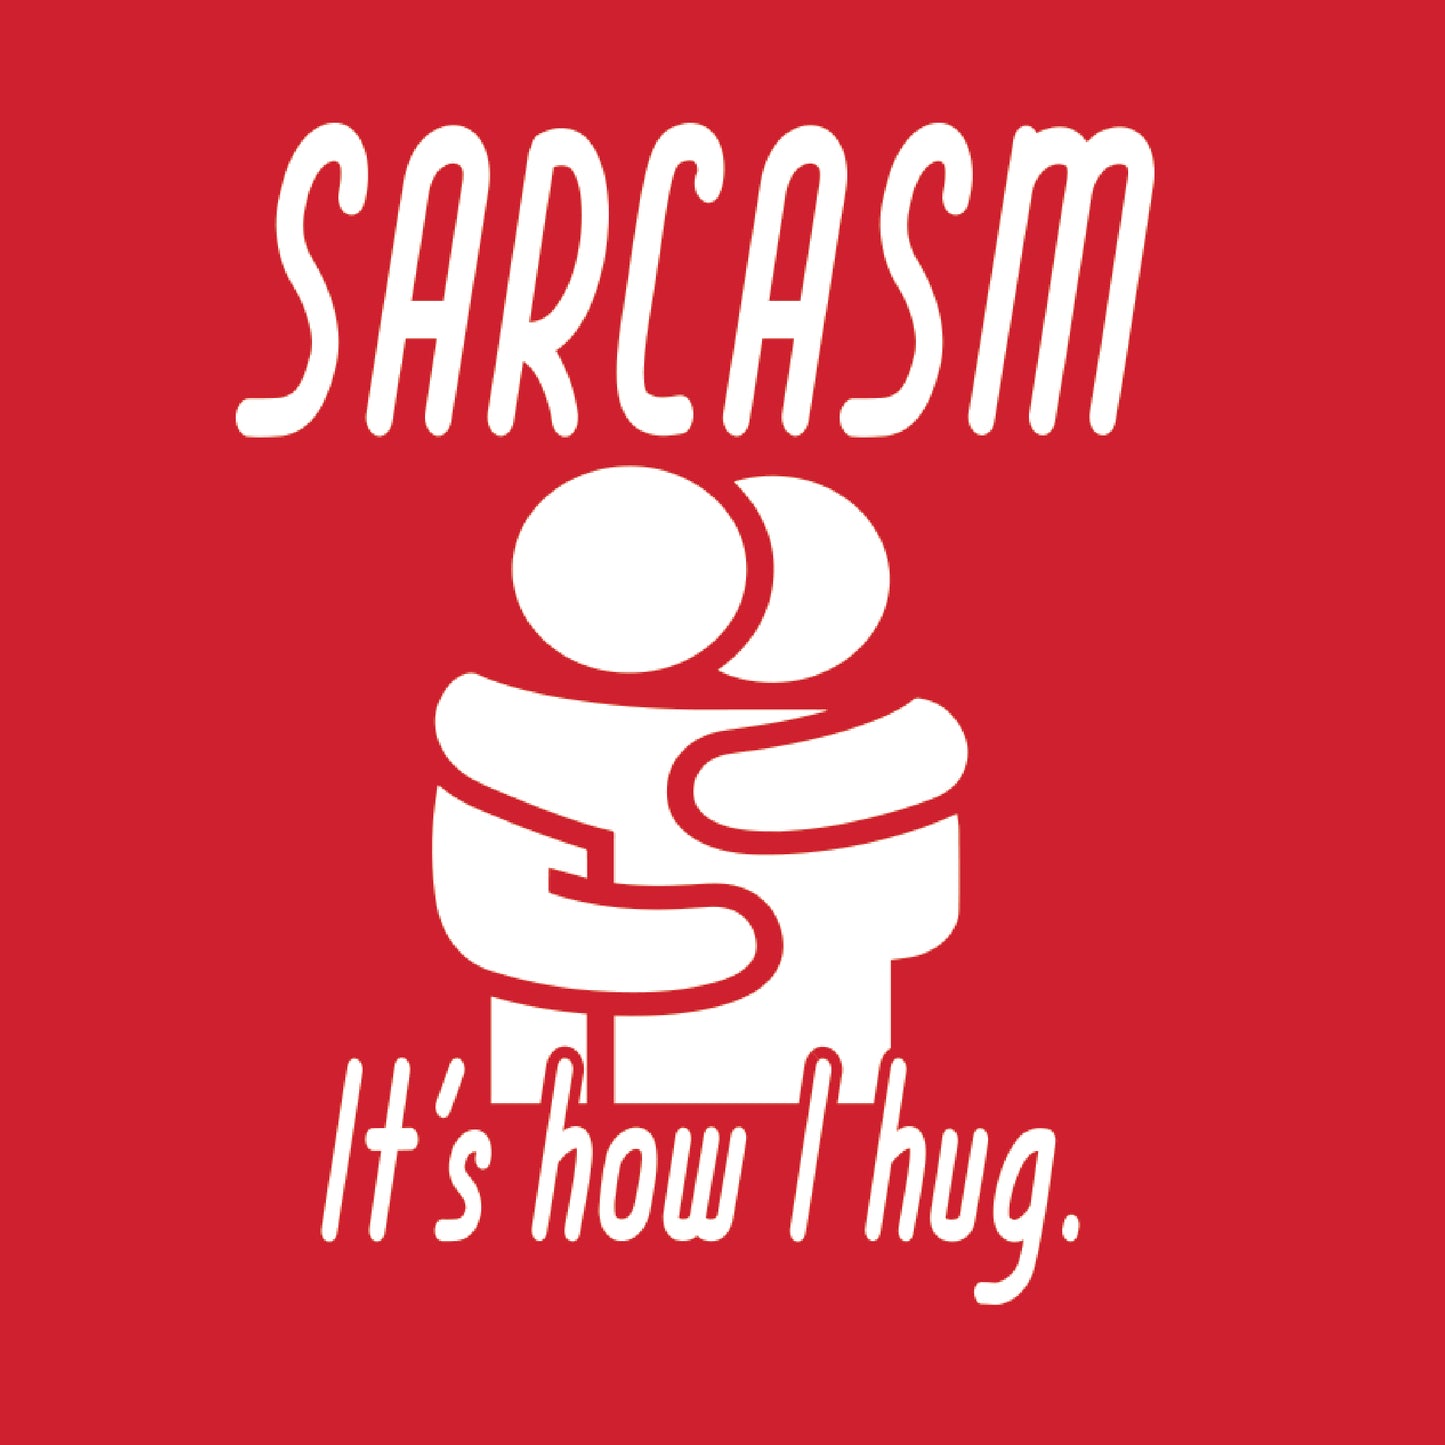 Sarcasm Its How I Hug